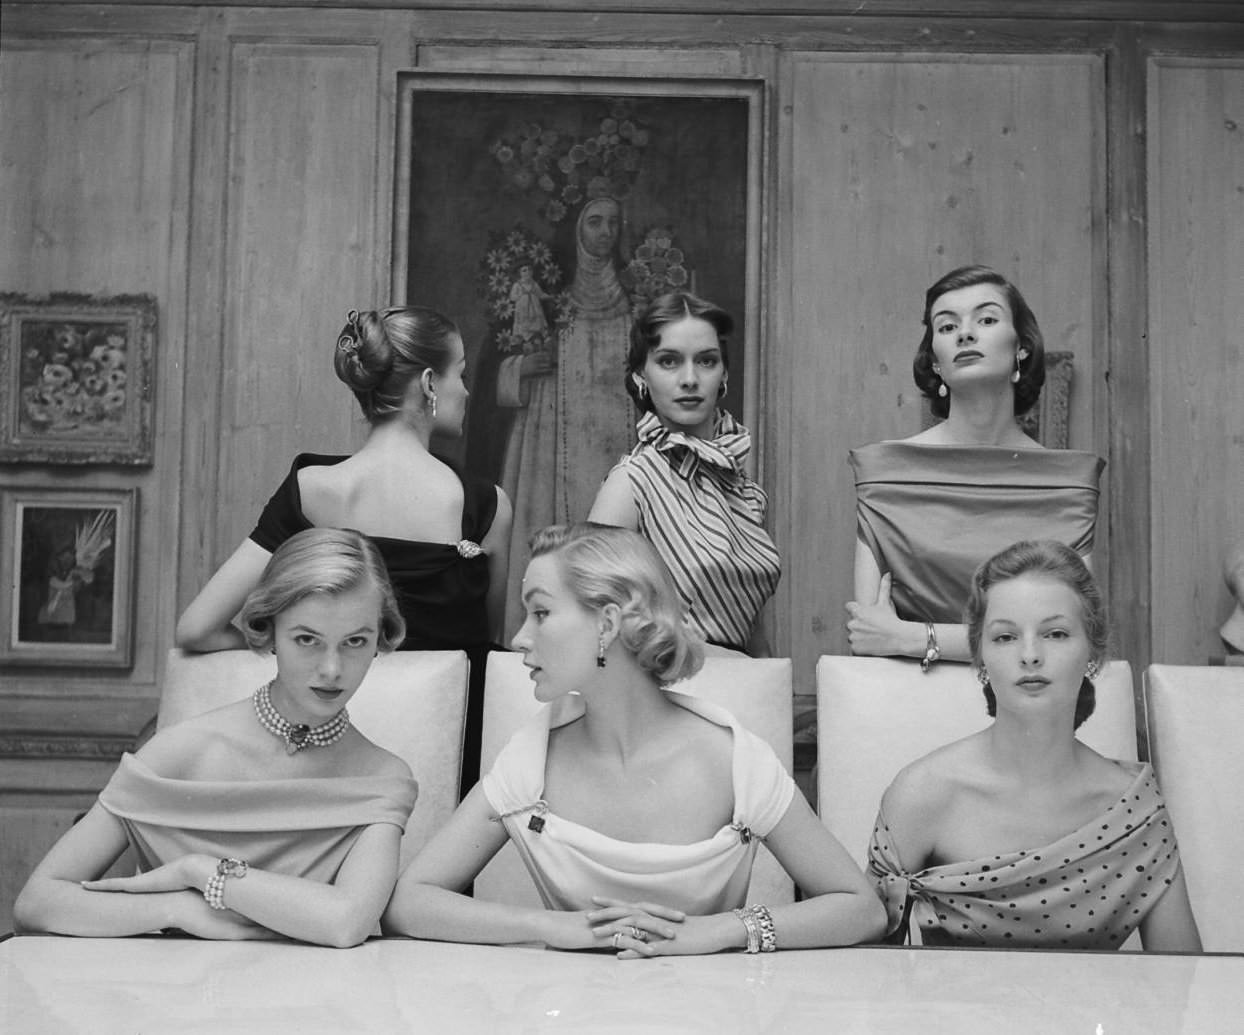 1950s women's fashion pose for LIFE magazine, photographer Nina Leen.